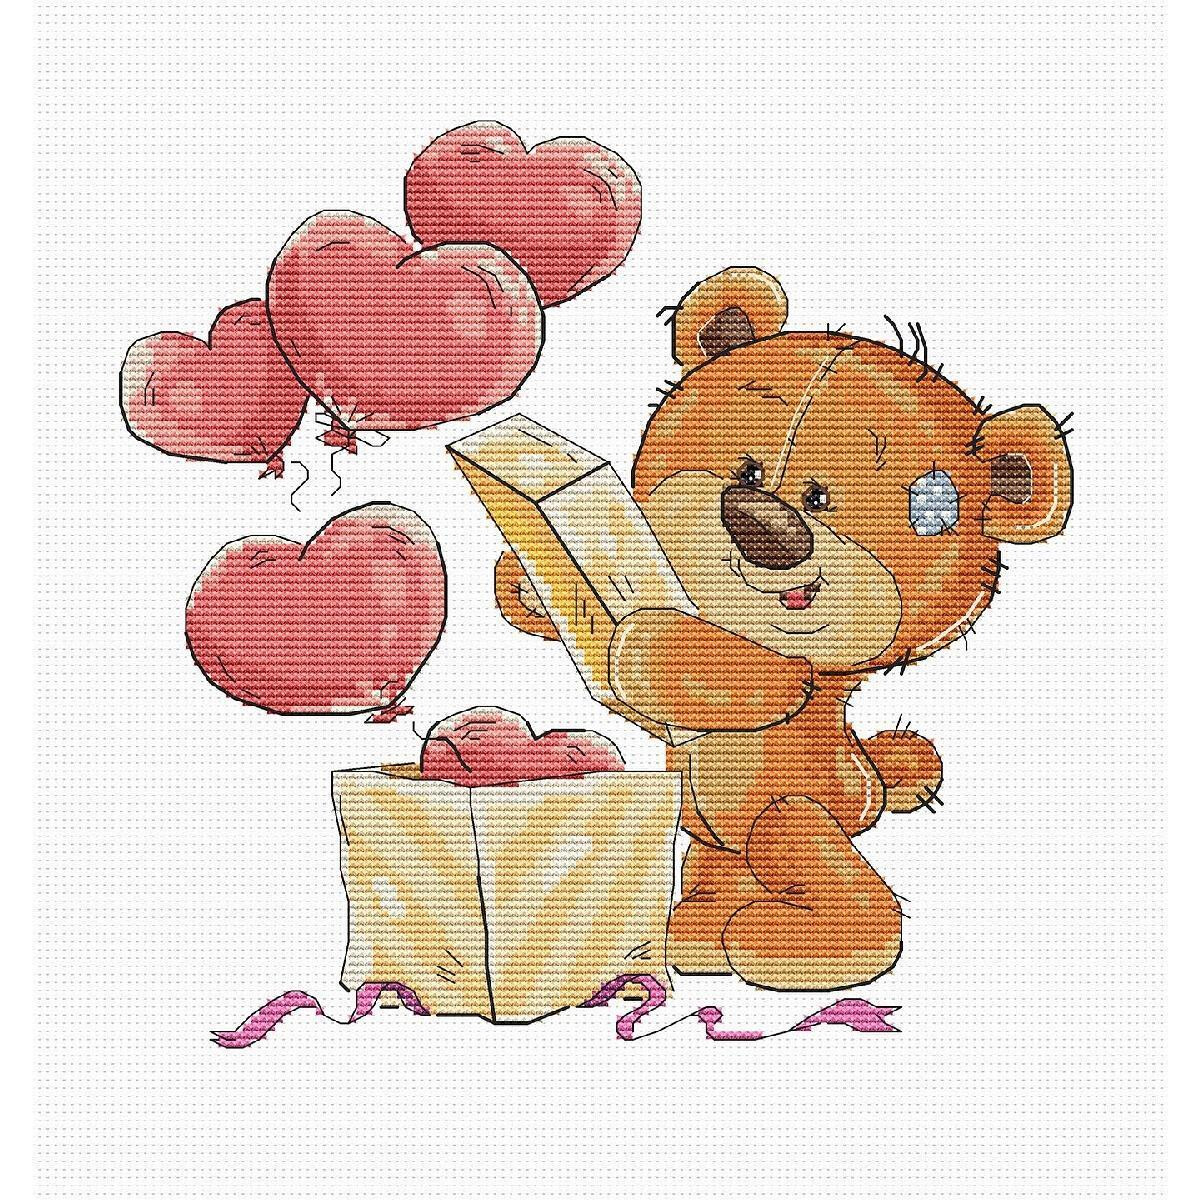 Une broderie dun adorable ours brun tenant une enveloppe...